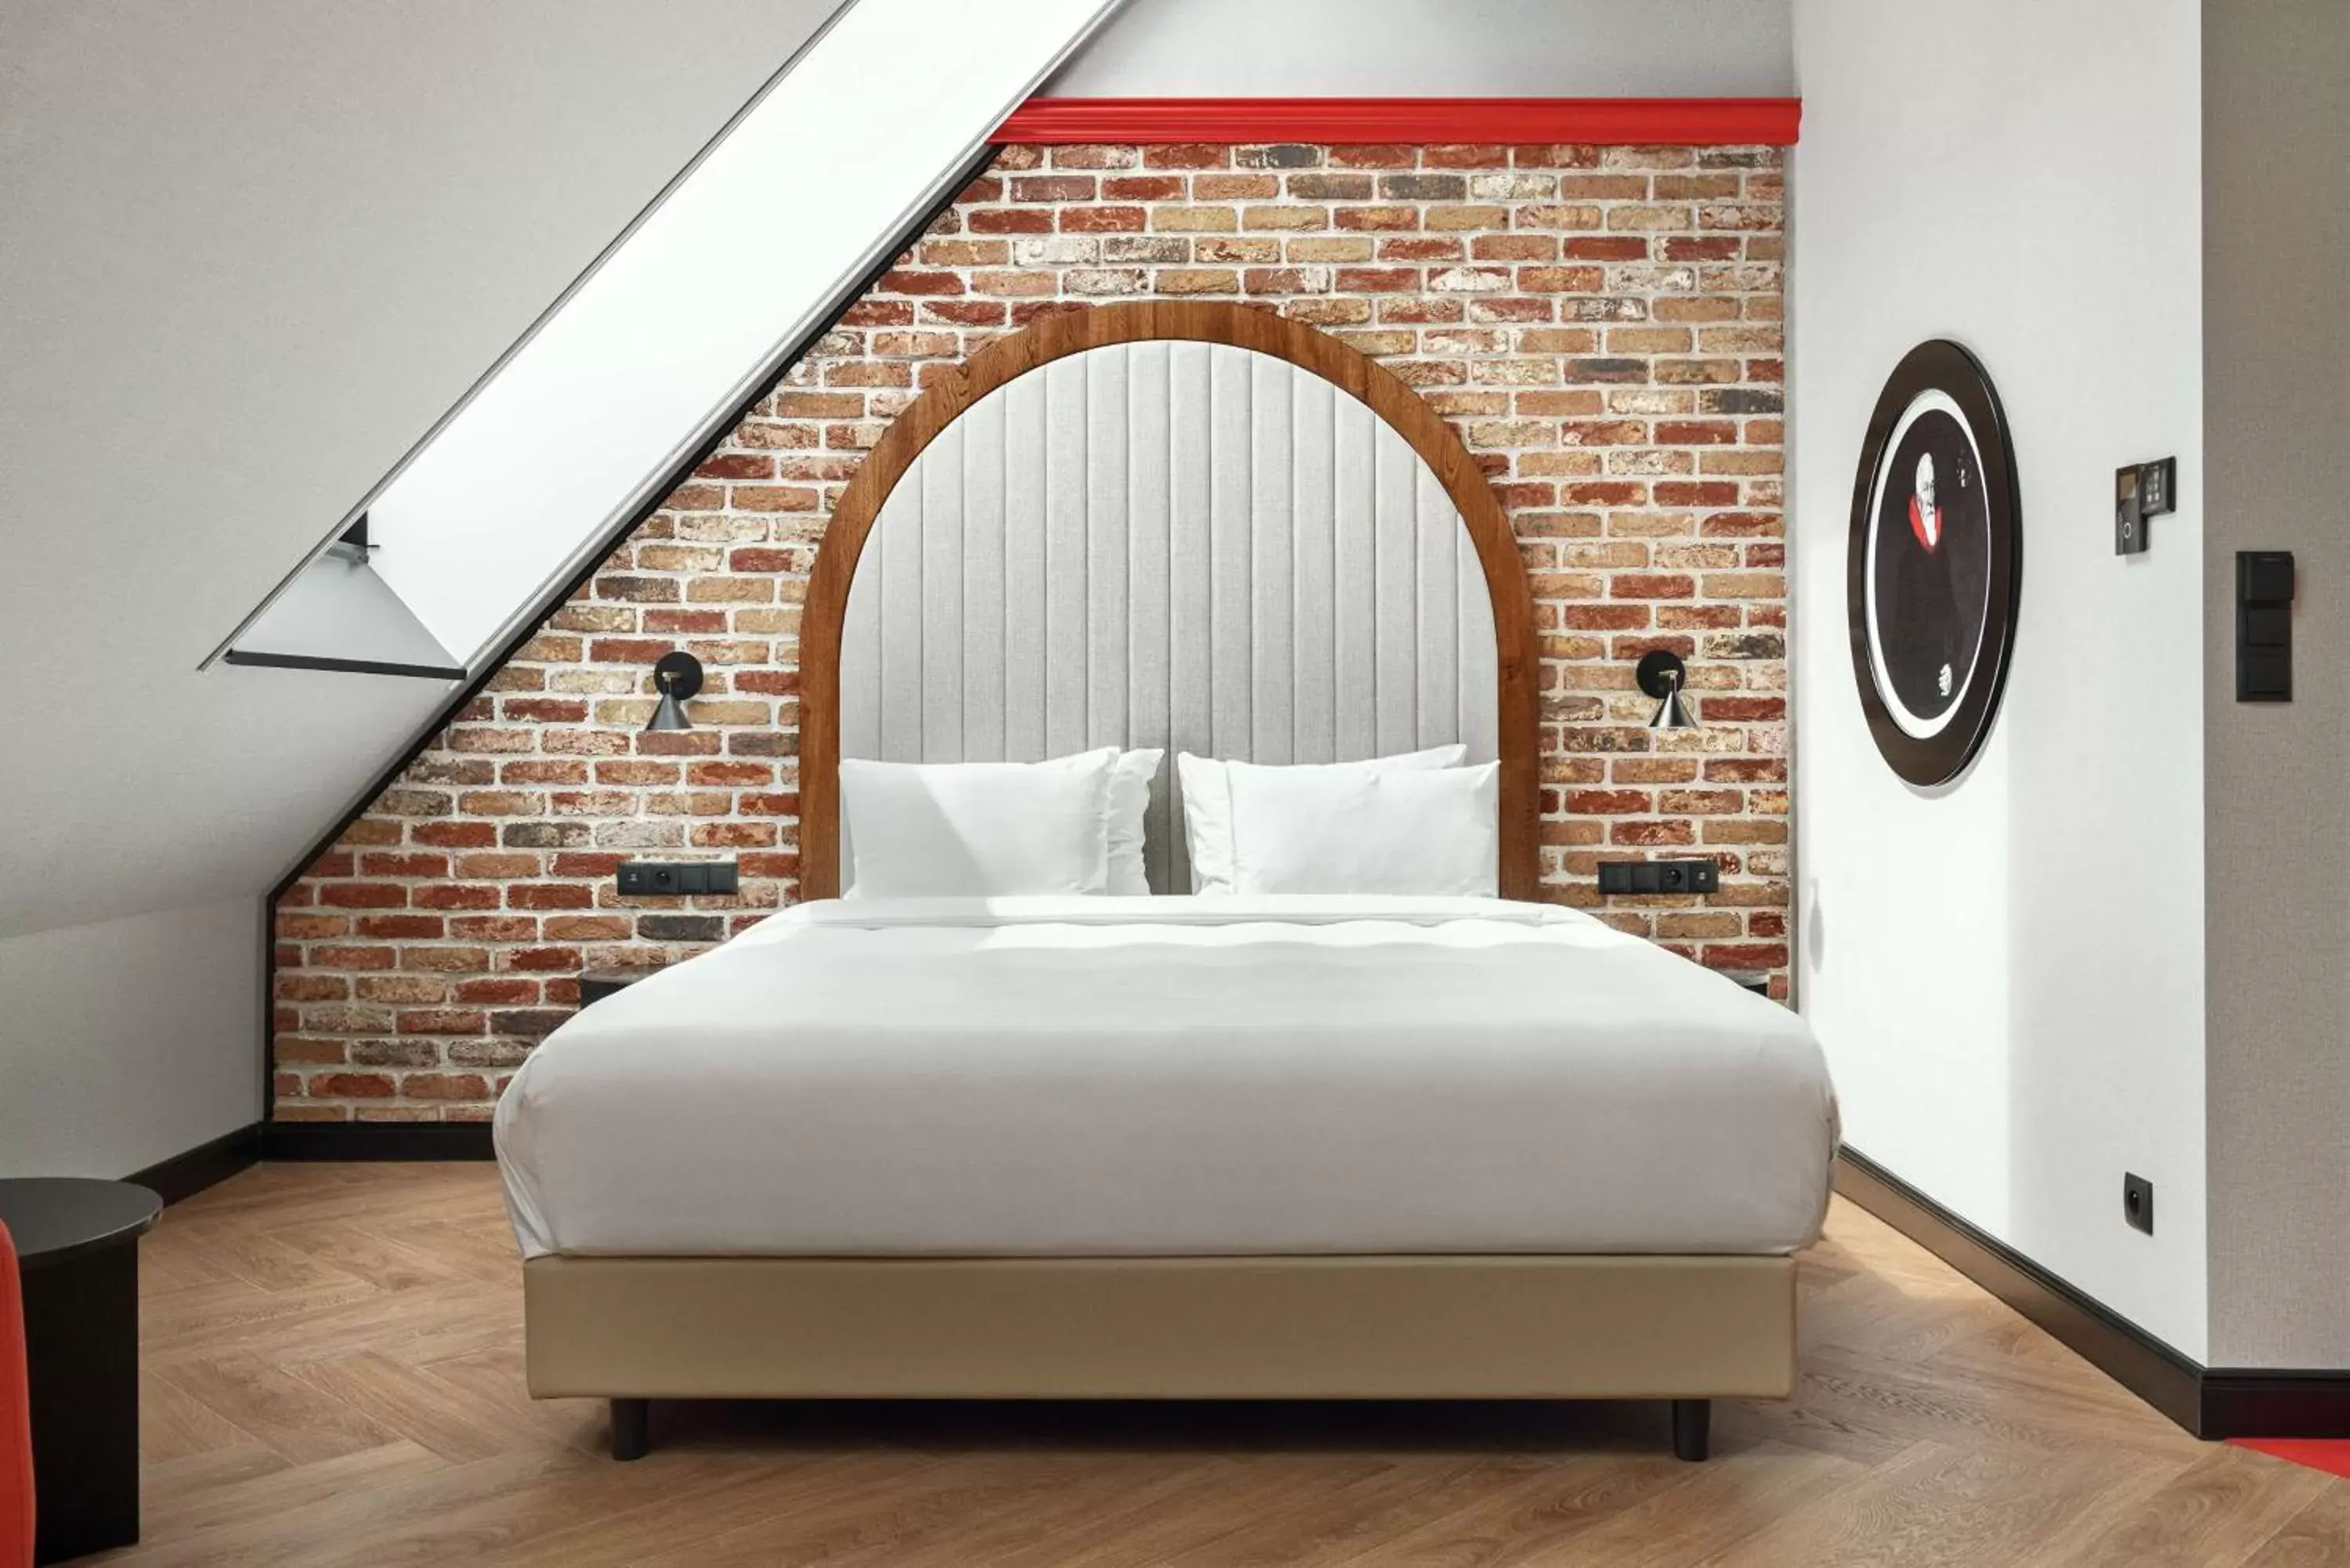 Bedroom, Bed in Radisson RED Gdansk